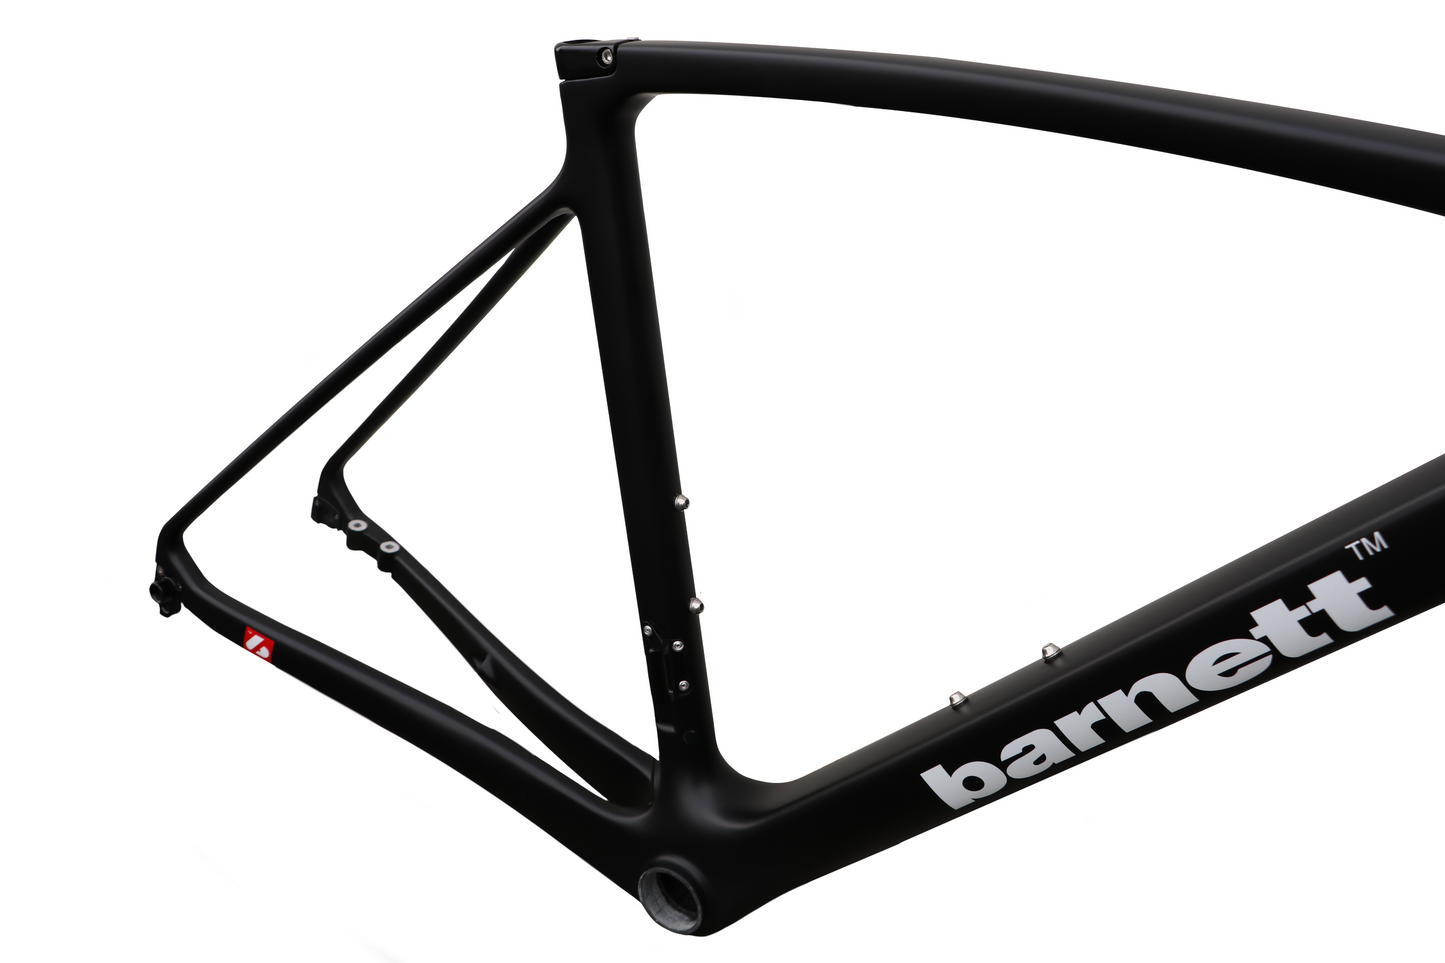 Rama rowerowa BDC-01 Carbon Disc, czarna, biała